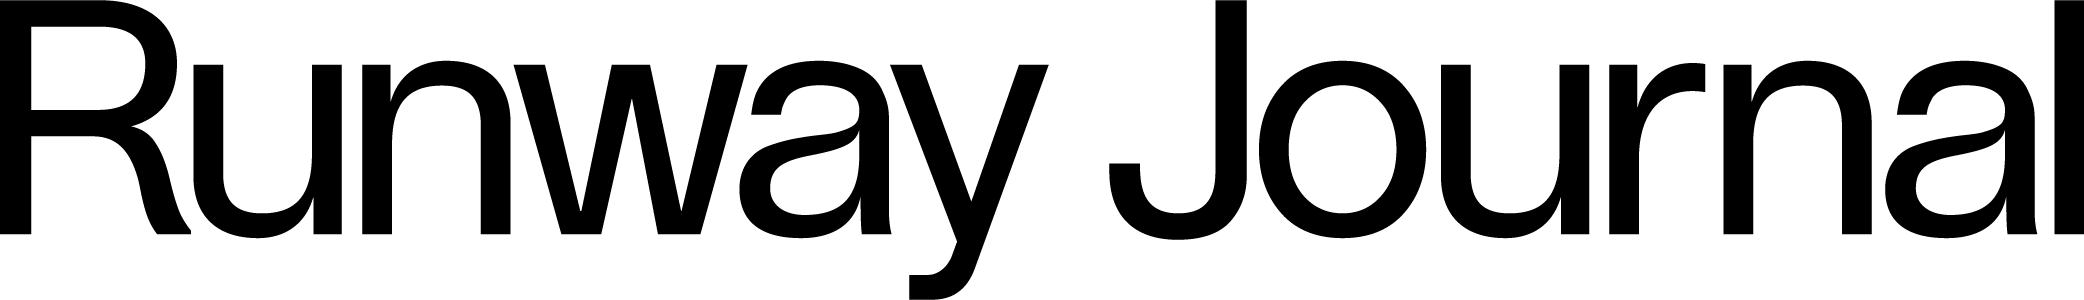 Runway Journal Inc. logo